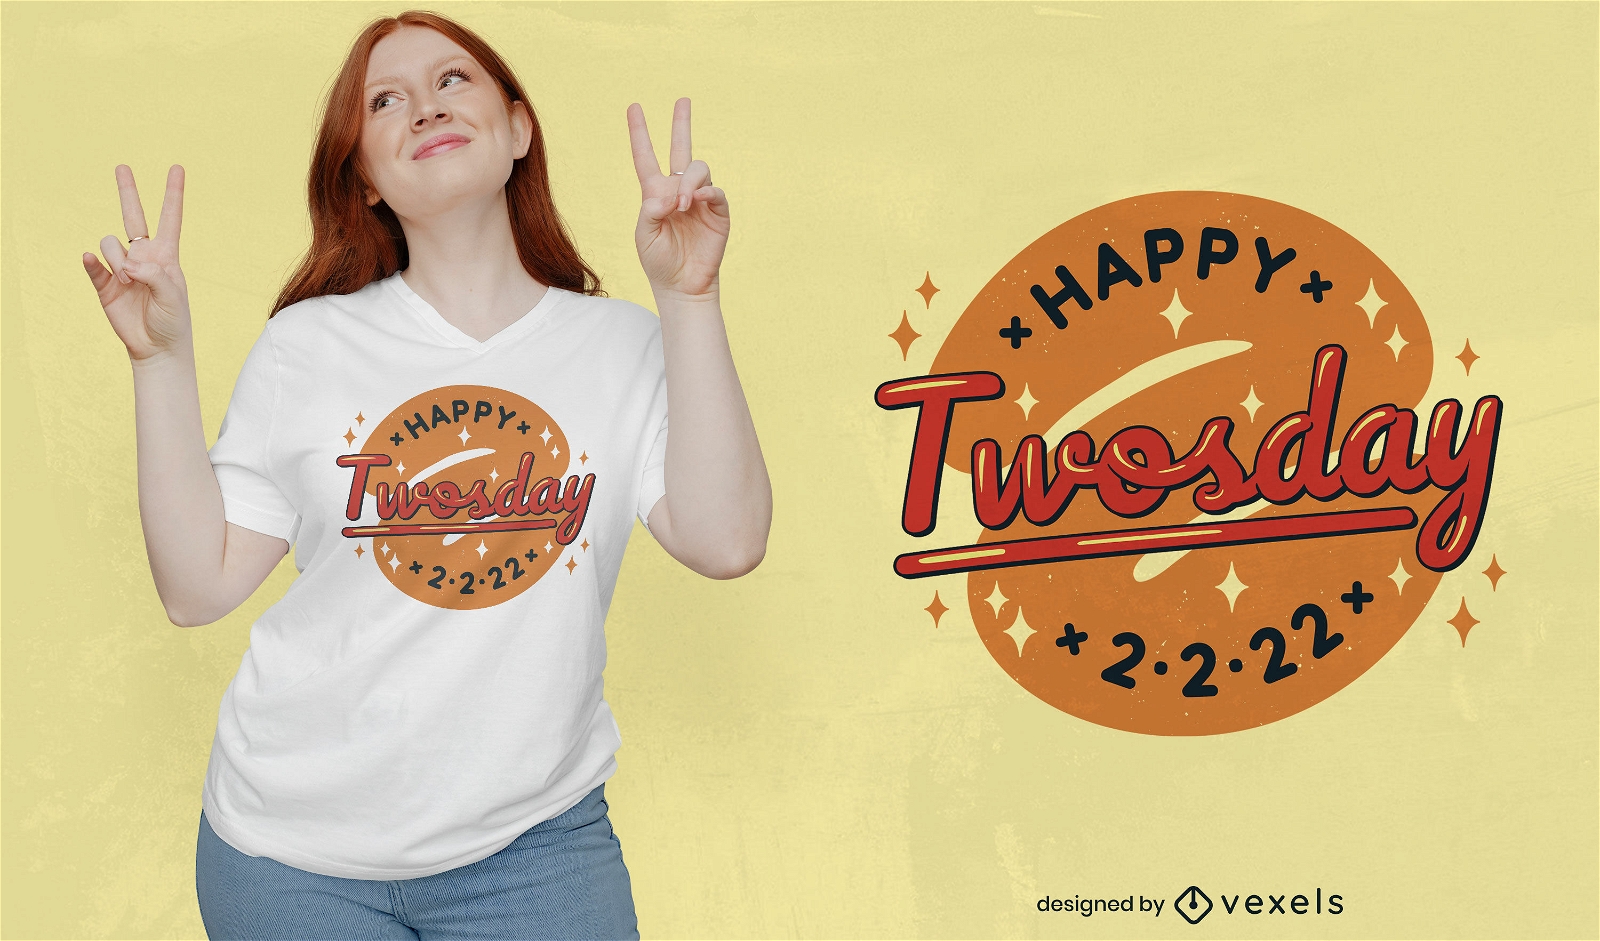 Happy twosday t-shirt design